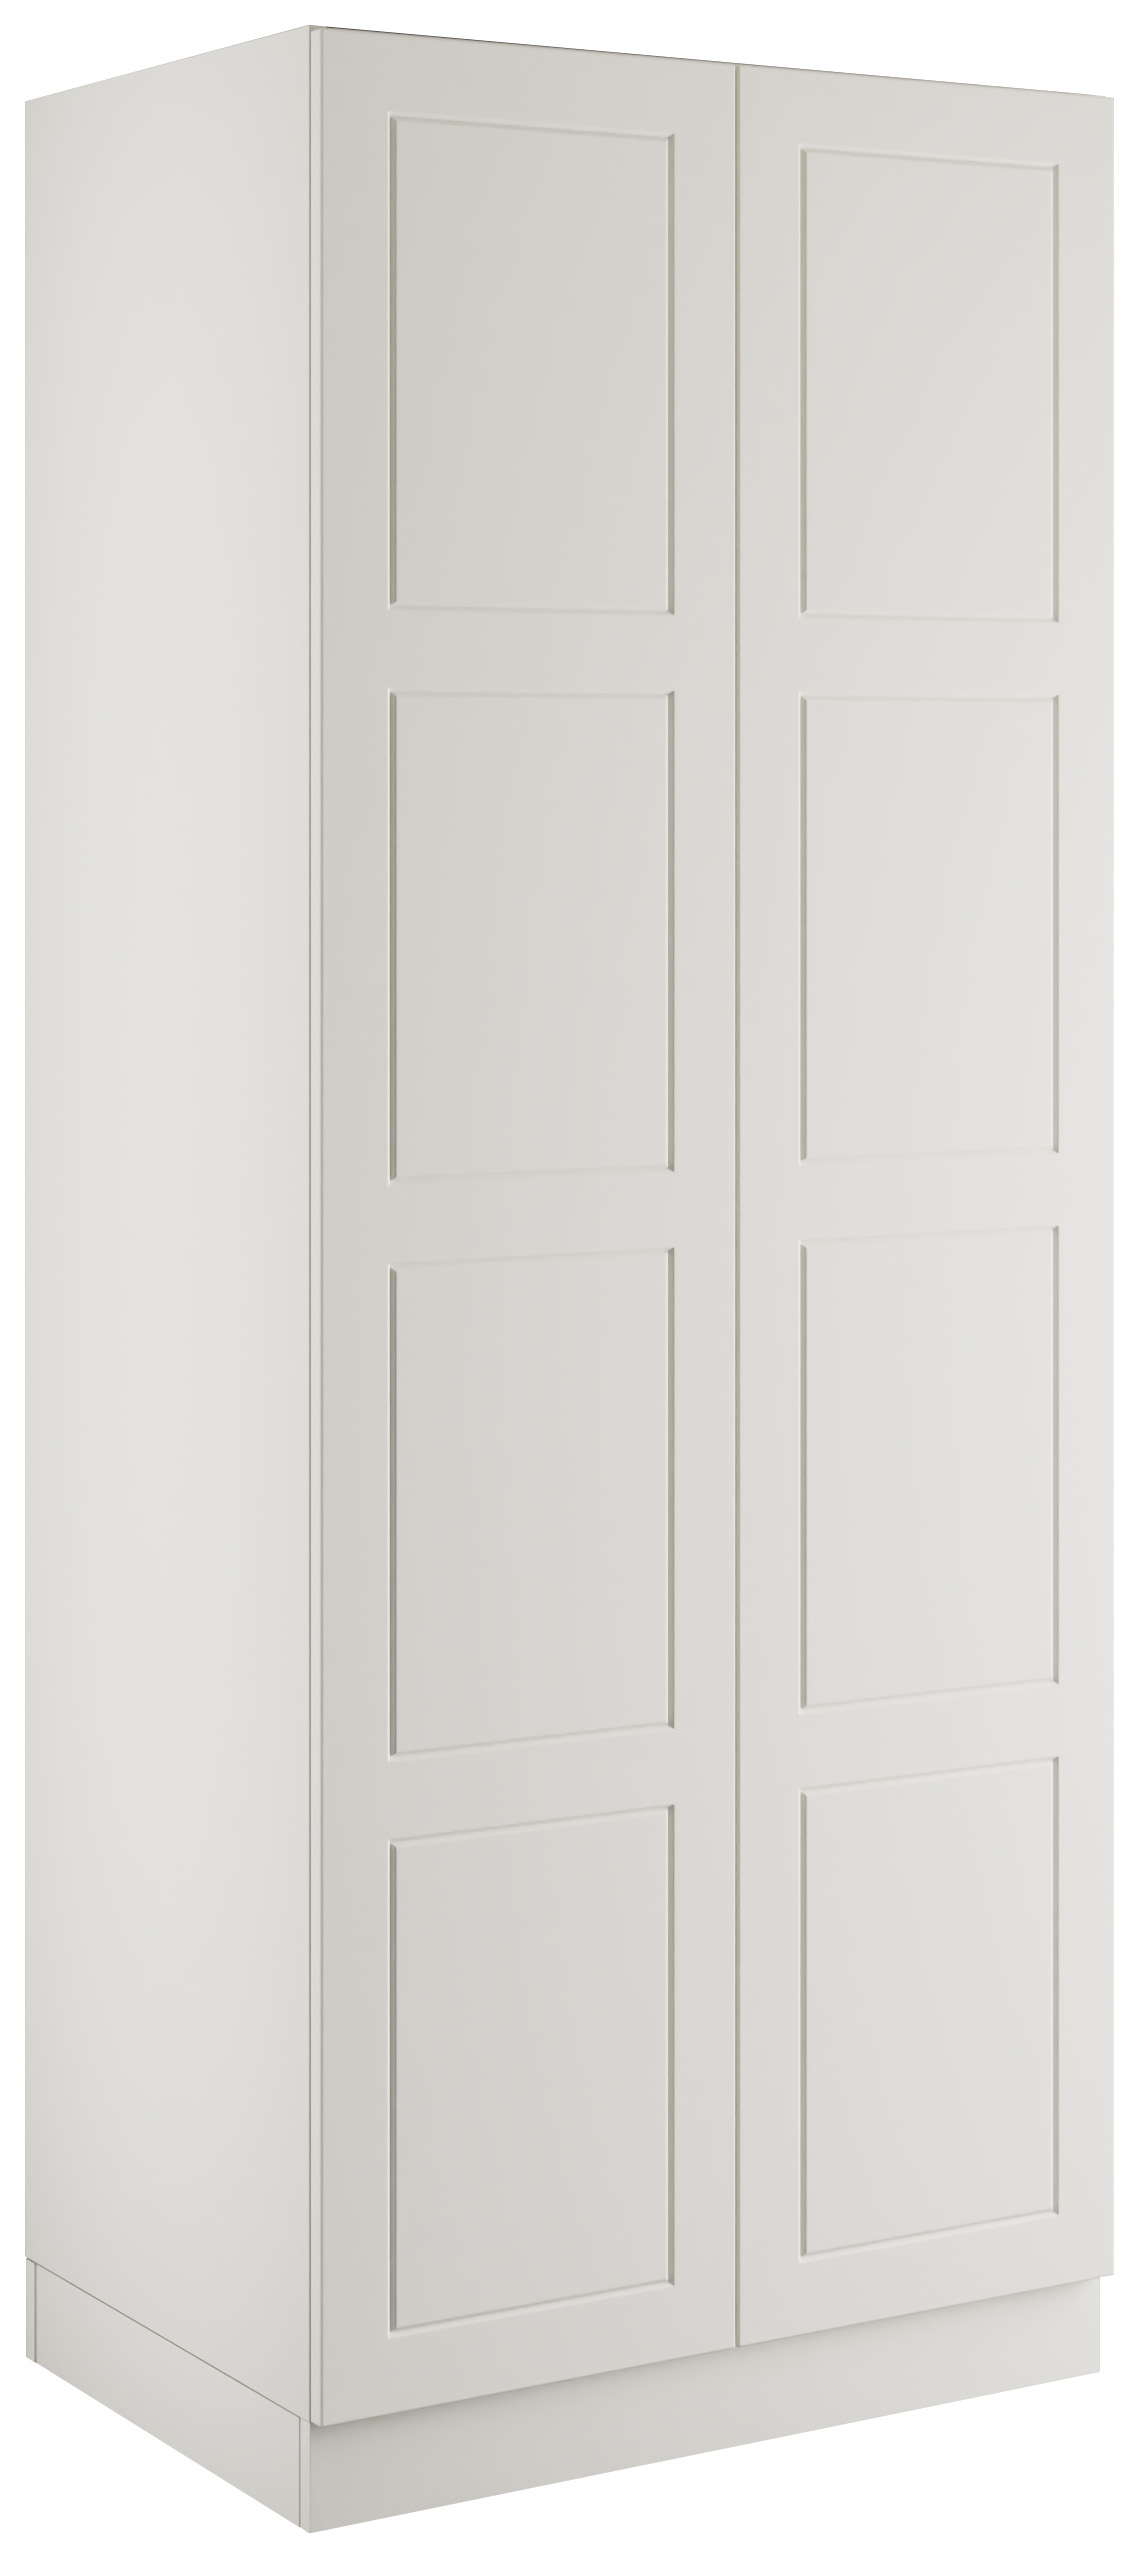 Bramham White Double Wardrobe with Double Rail - 900 x 2260 x 608mm